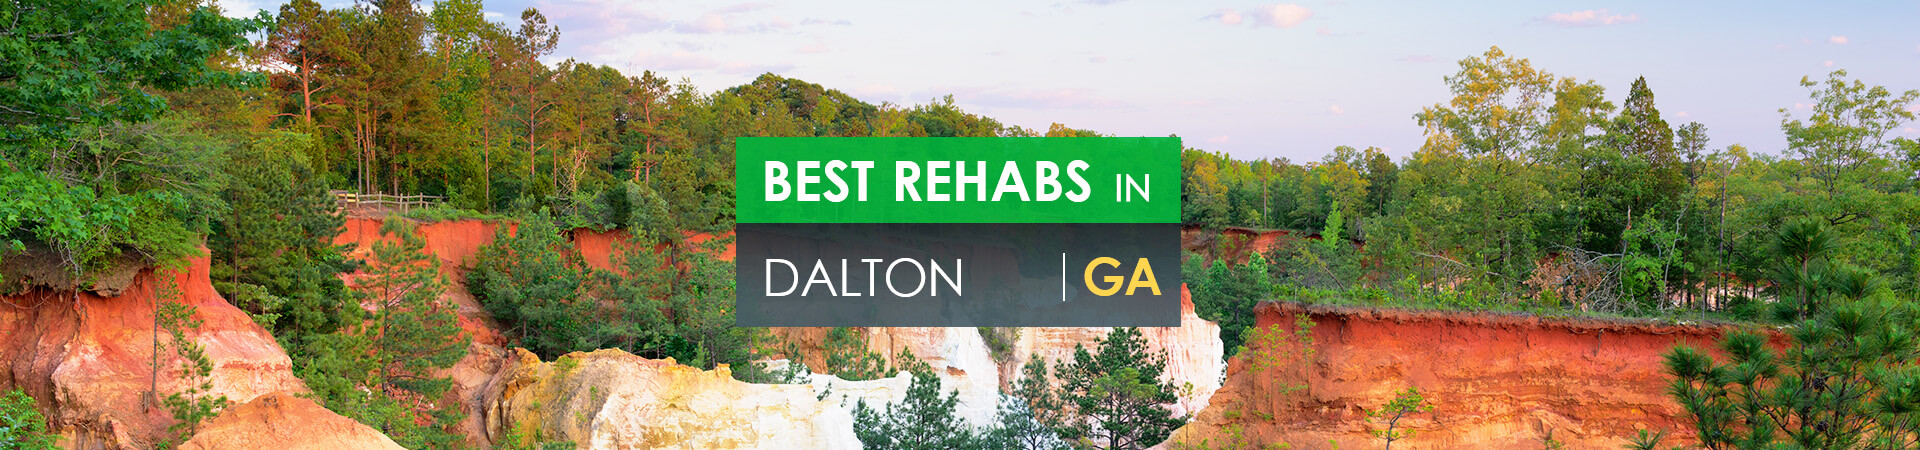 Best rehabs in Dalton, GA